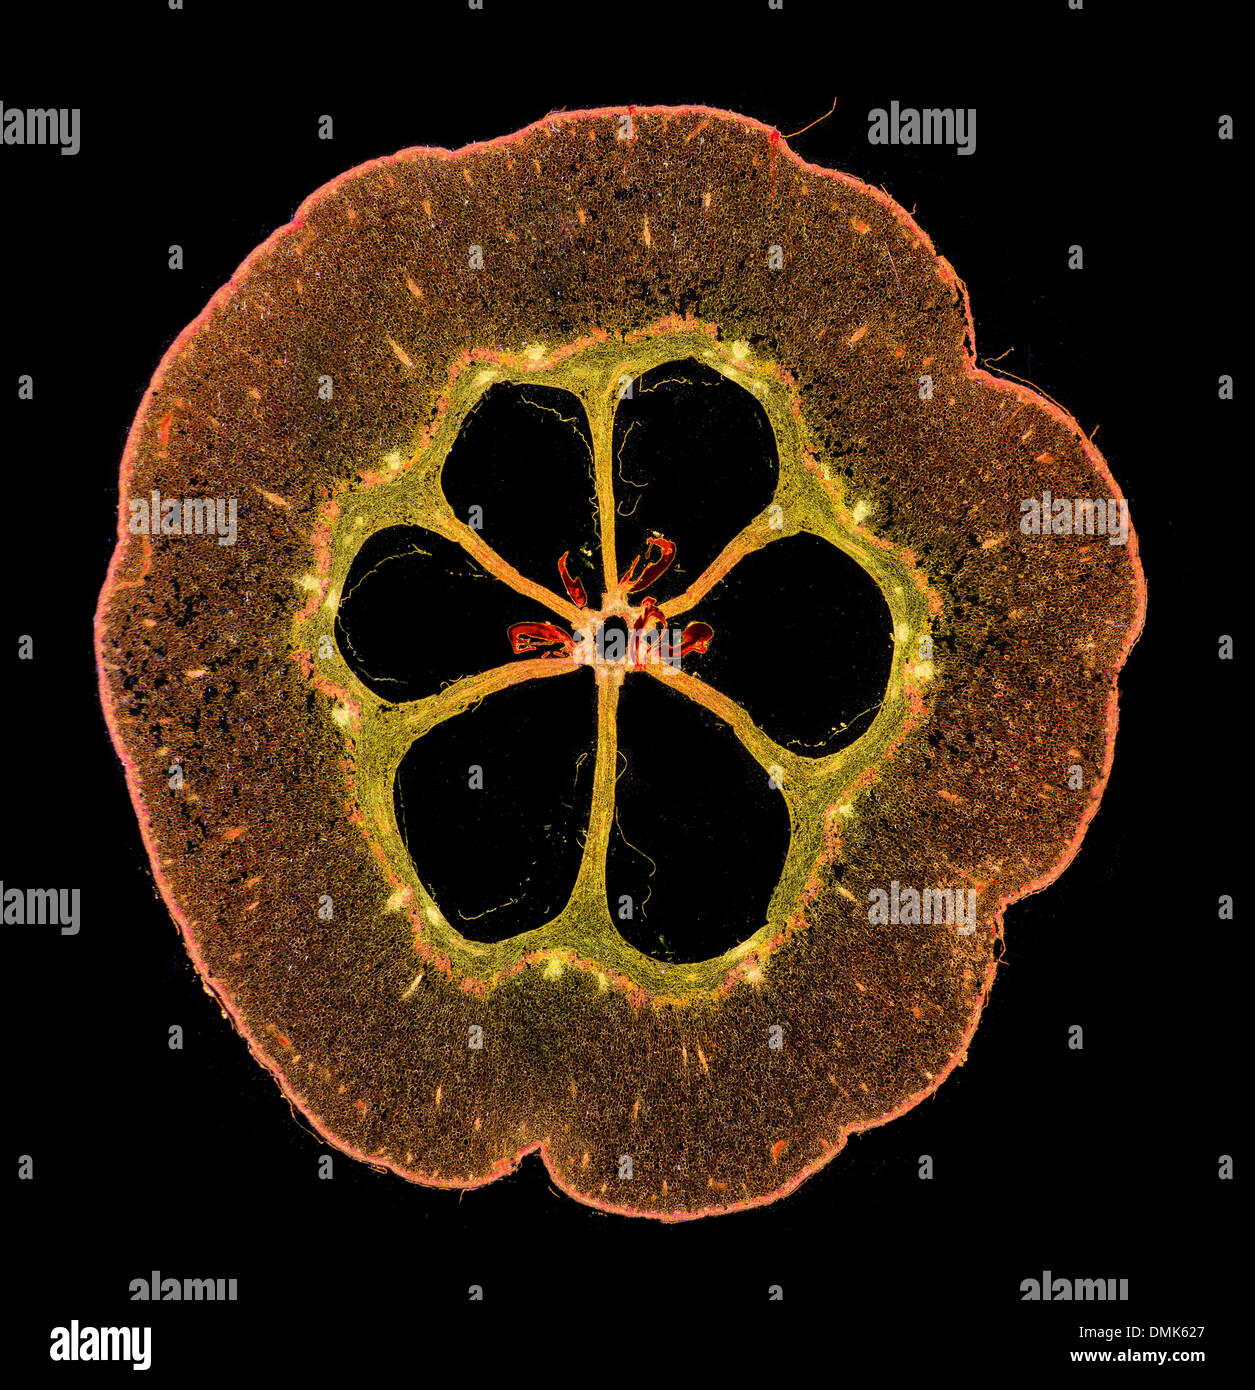 Passiflora sp. seed pod TS darkfield photomicrograph, Stock Photo